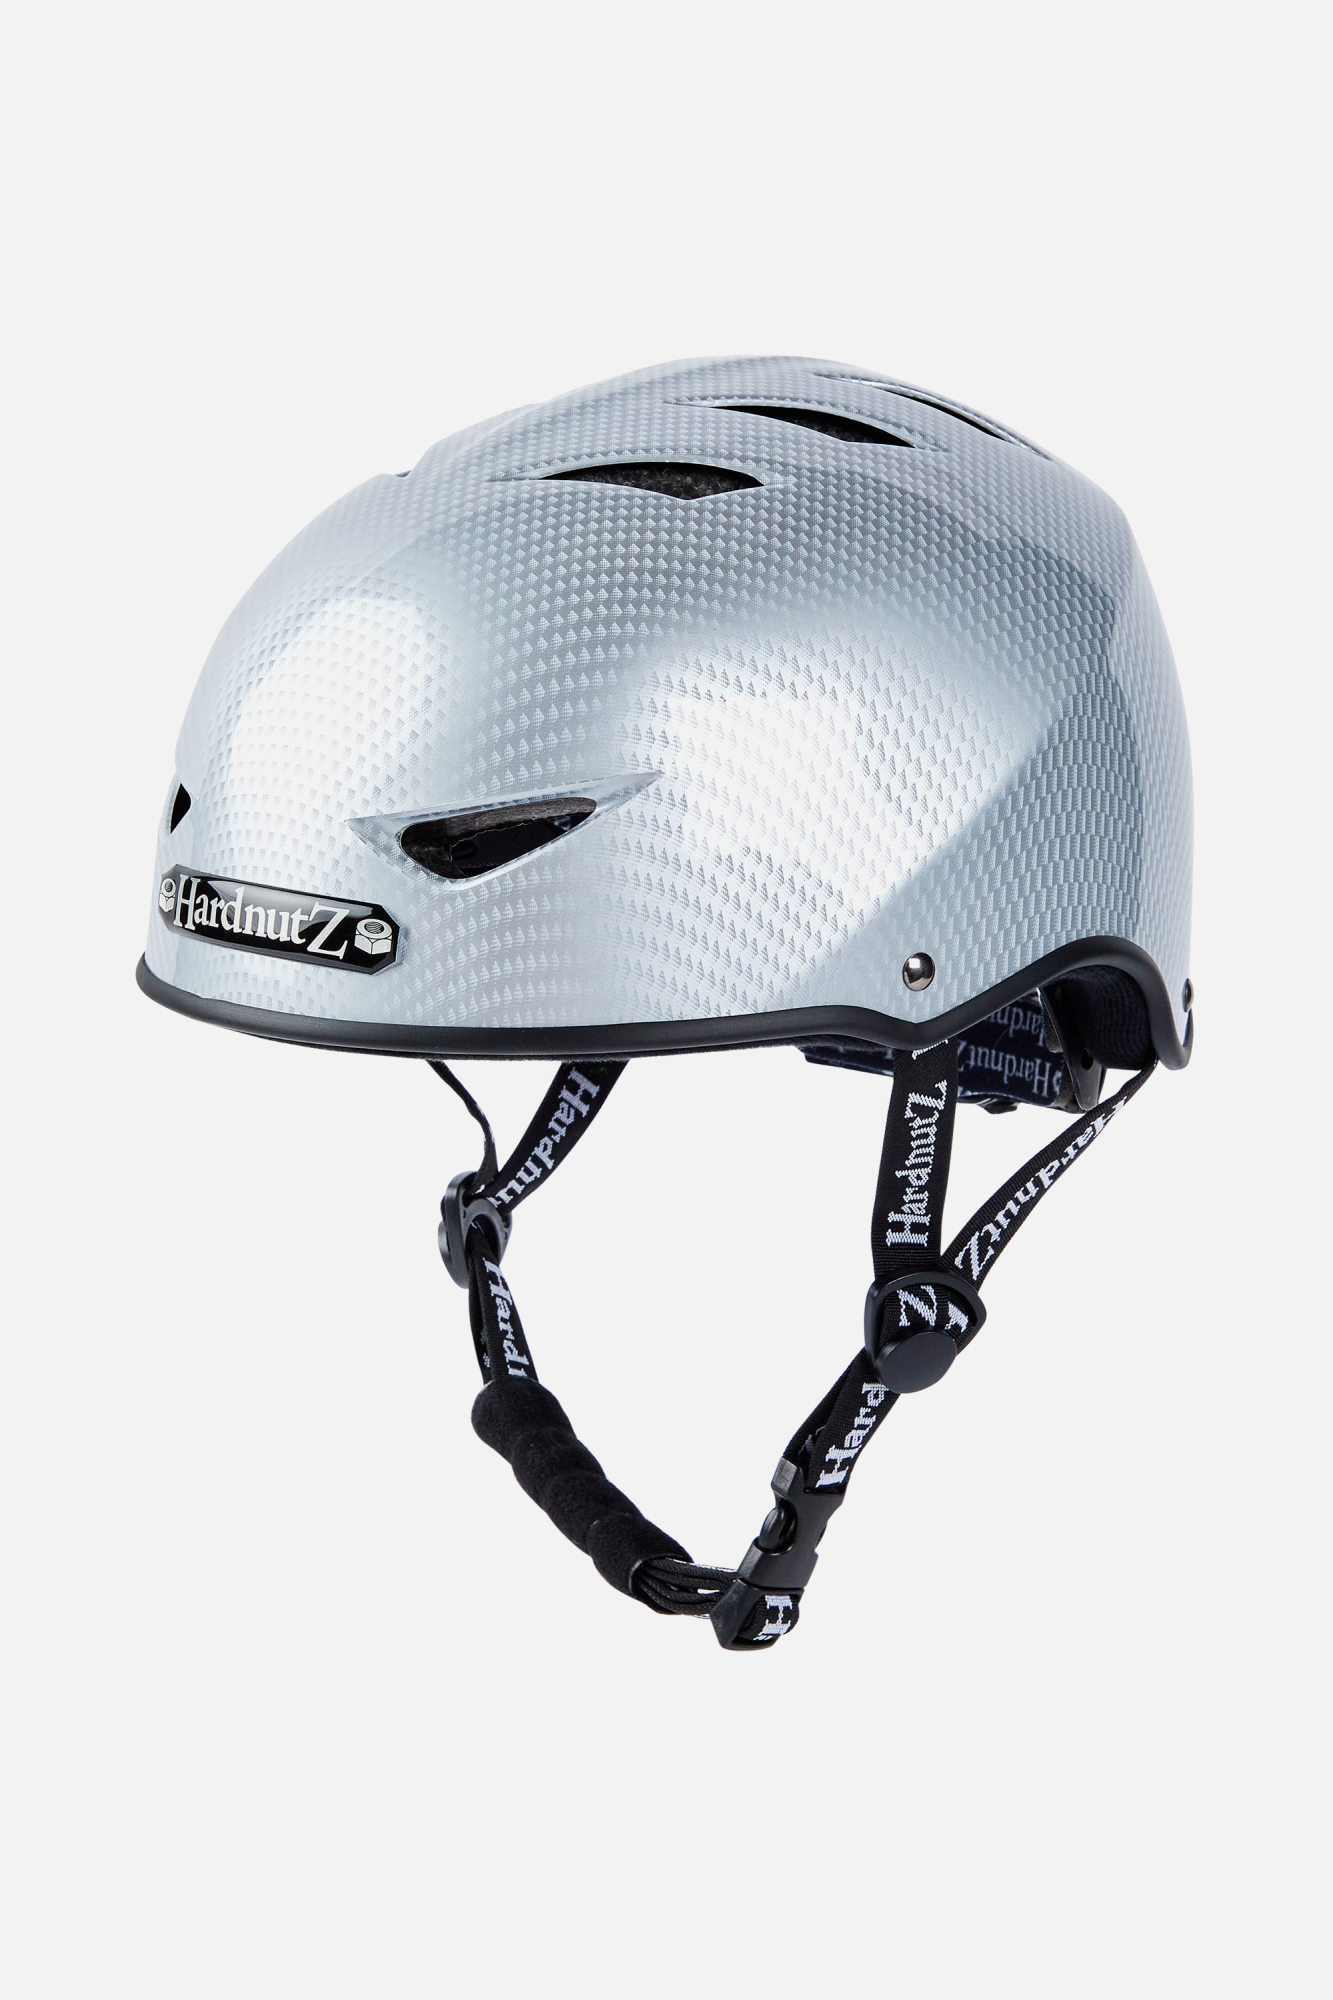 Hardnutz Unisex Street Helmet Silver - Size: Medium